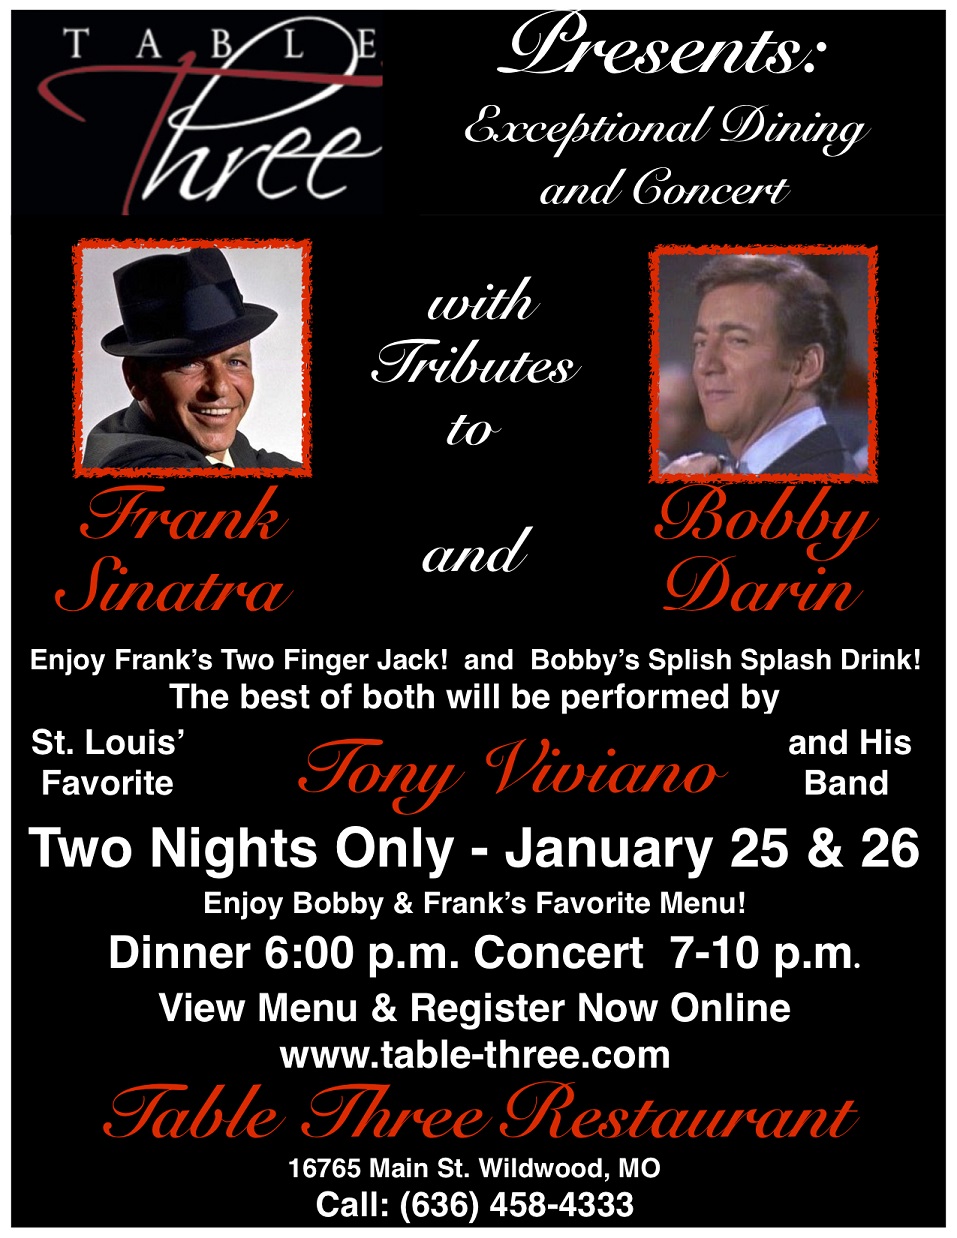 Sinatra-Darin Tribute Dinner-Concert -Tony Viviano @ Table 3